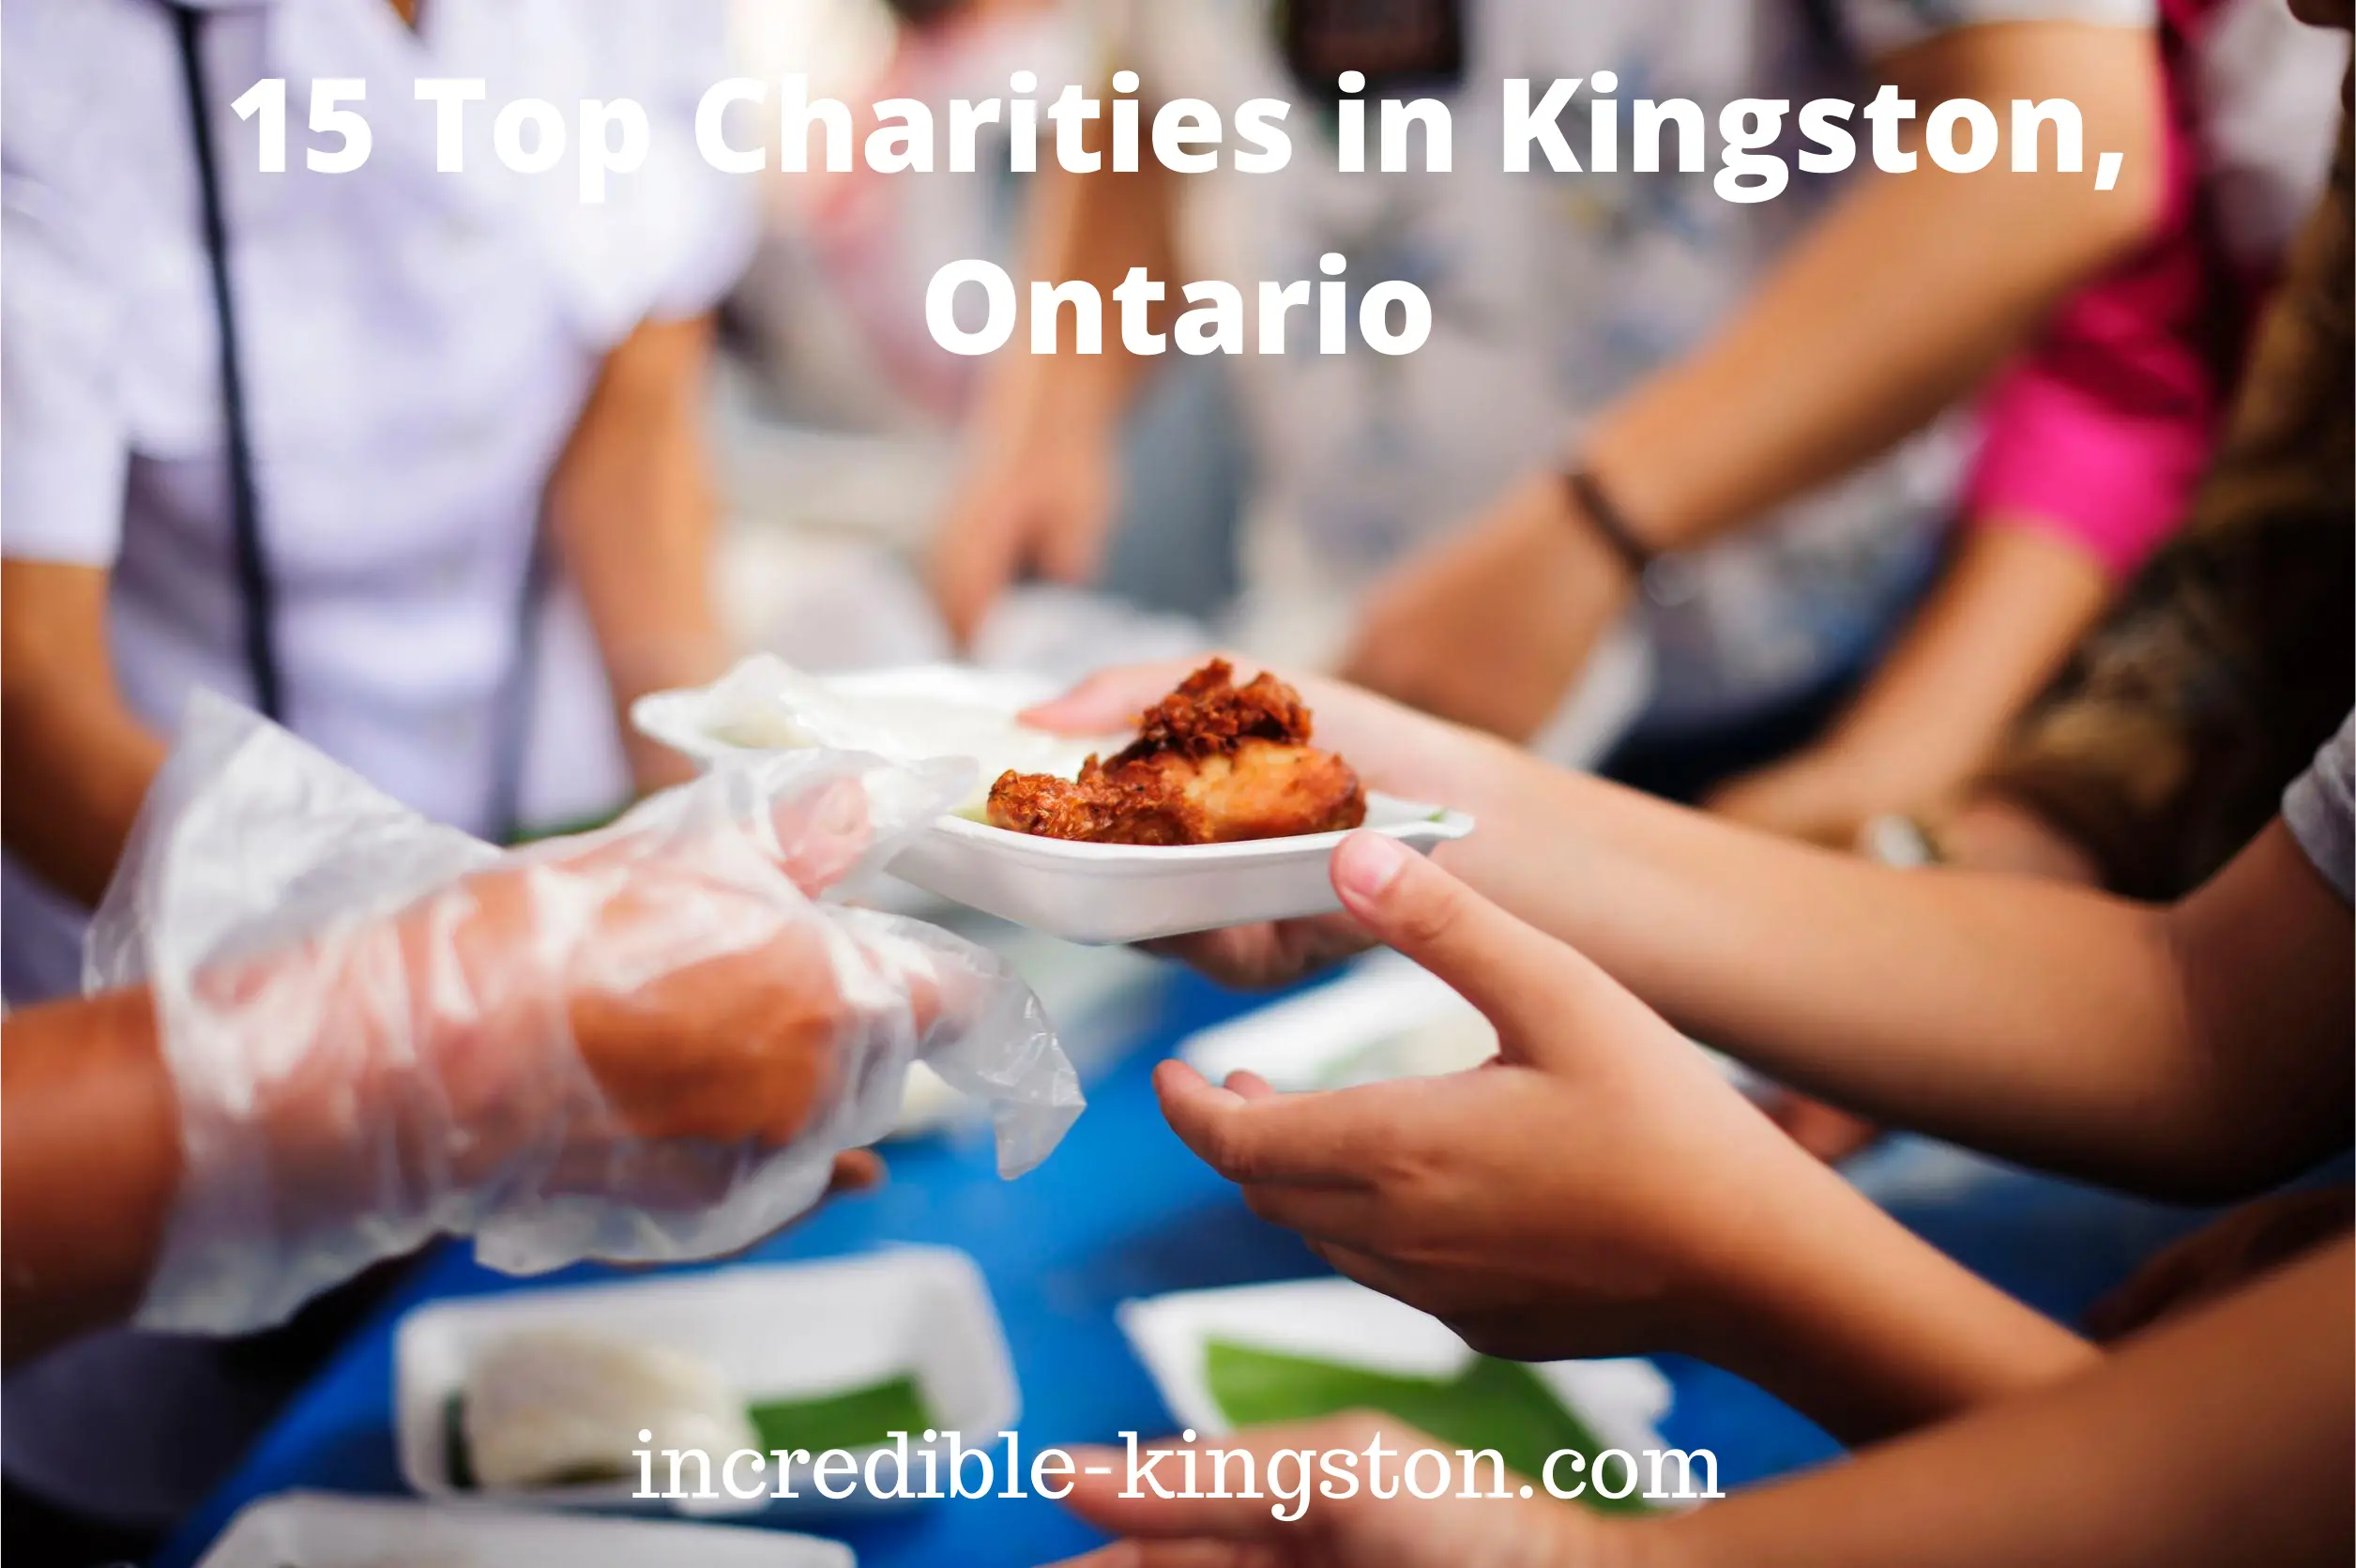 Charities in Kingston, Ontario